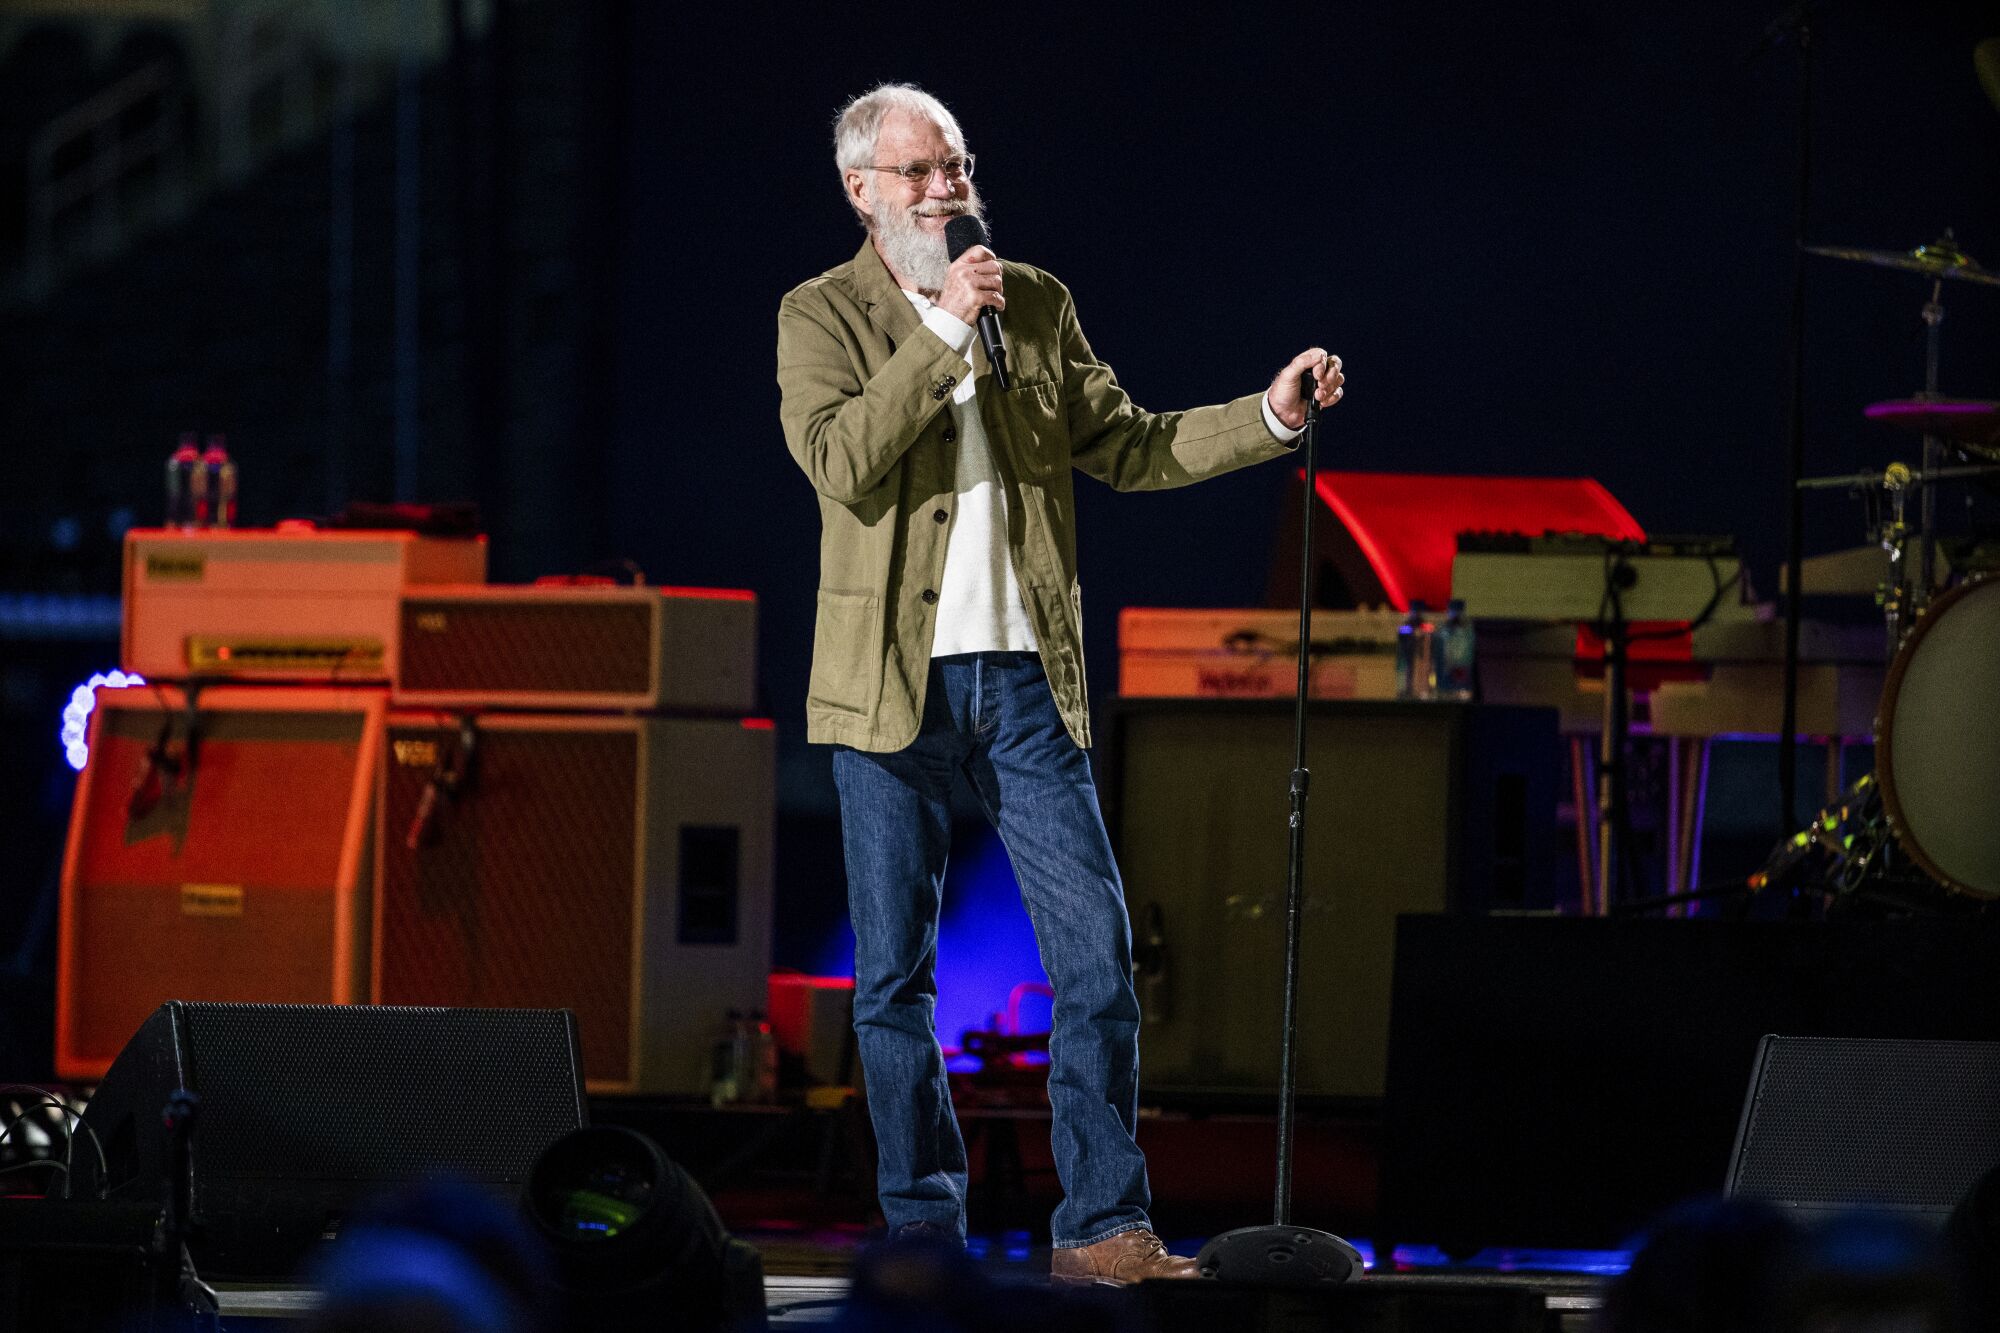 David Letterman speaks during the Vax Live concert